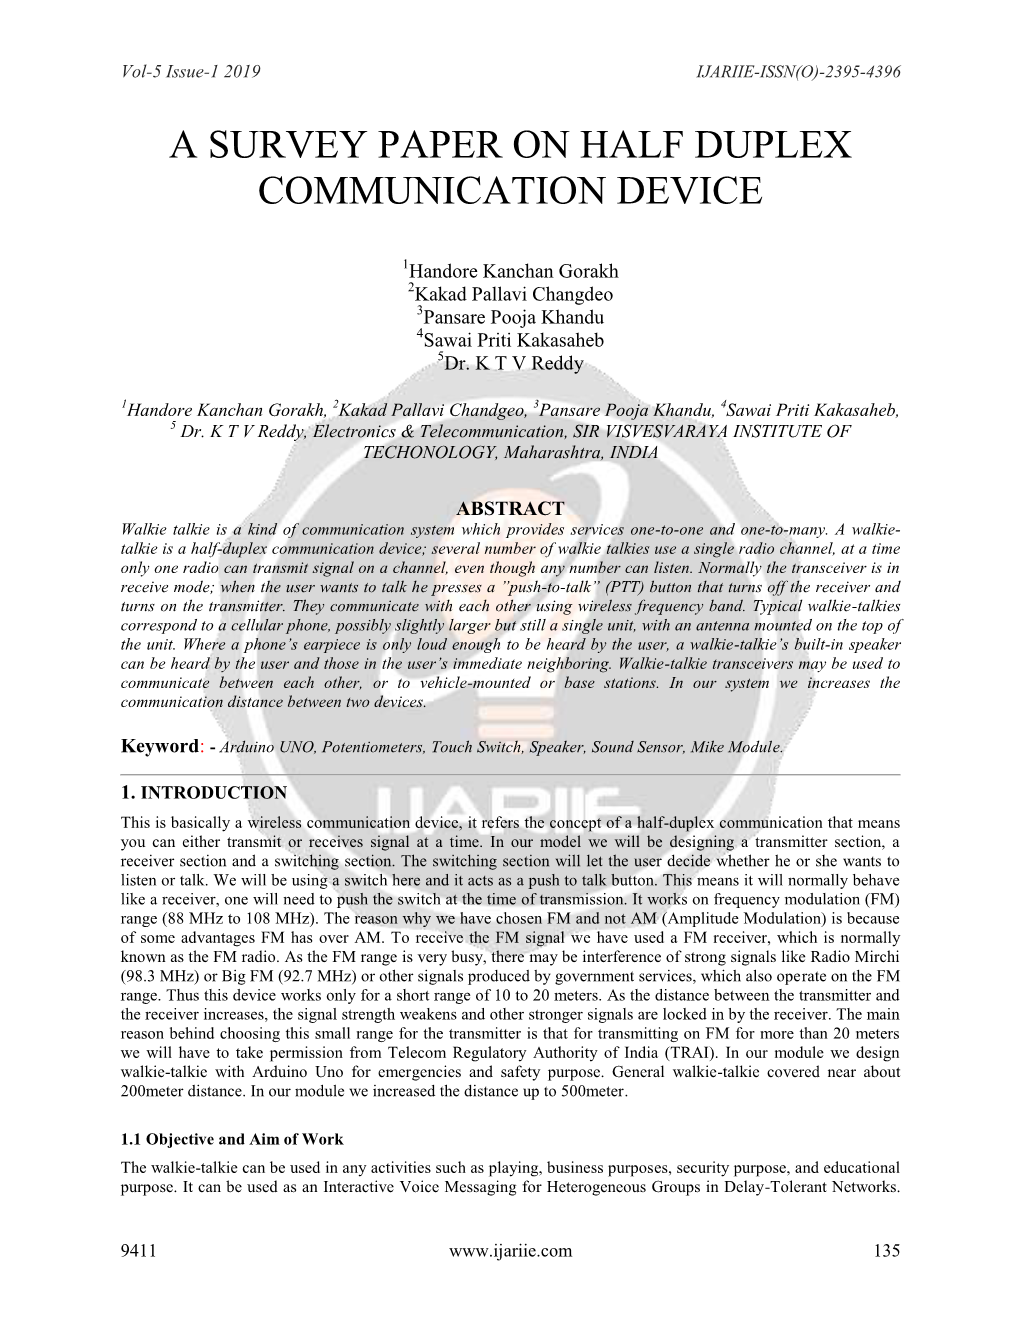 A Survey Paper on Half Duplex Communication Device